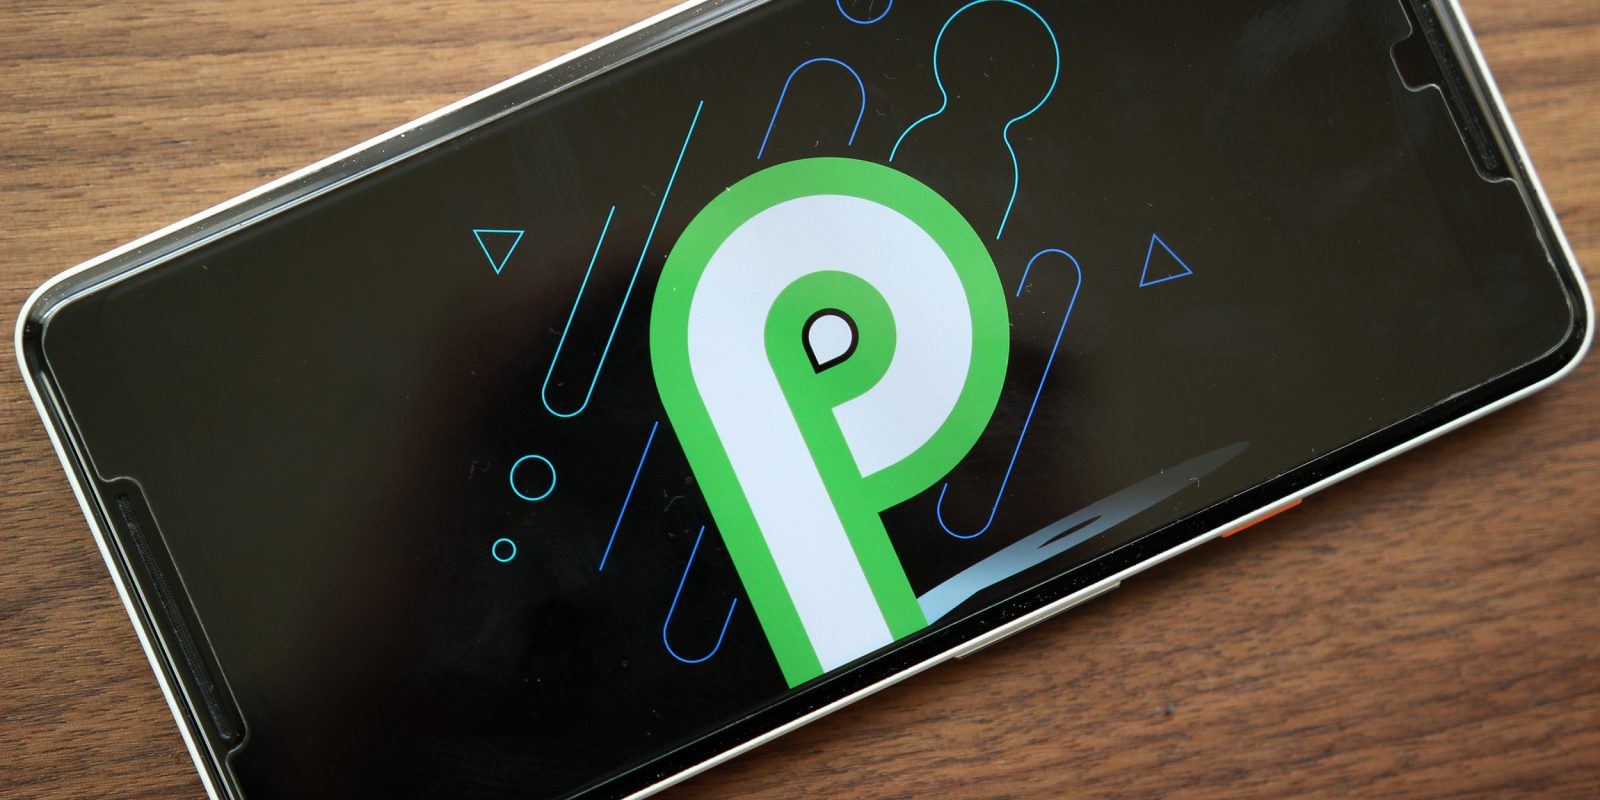 OnePlus 6 Android P Beta 2